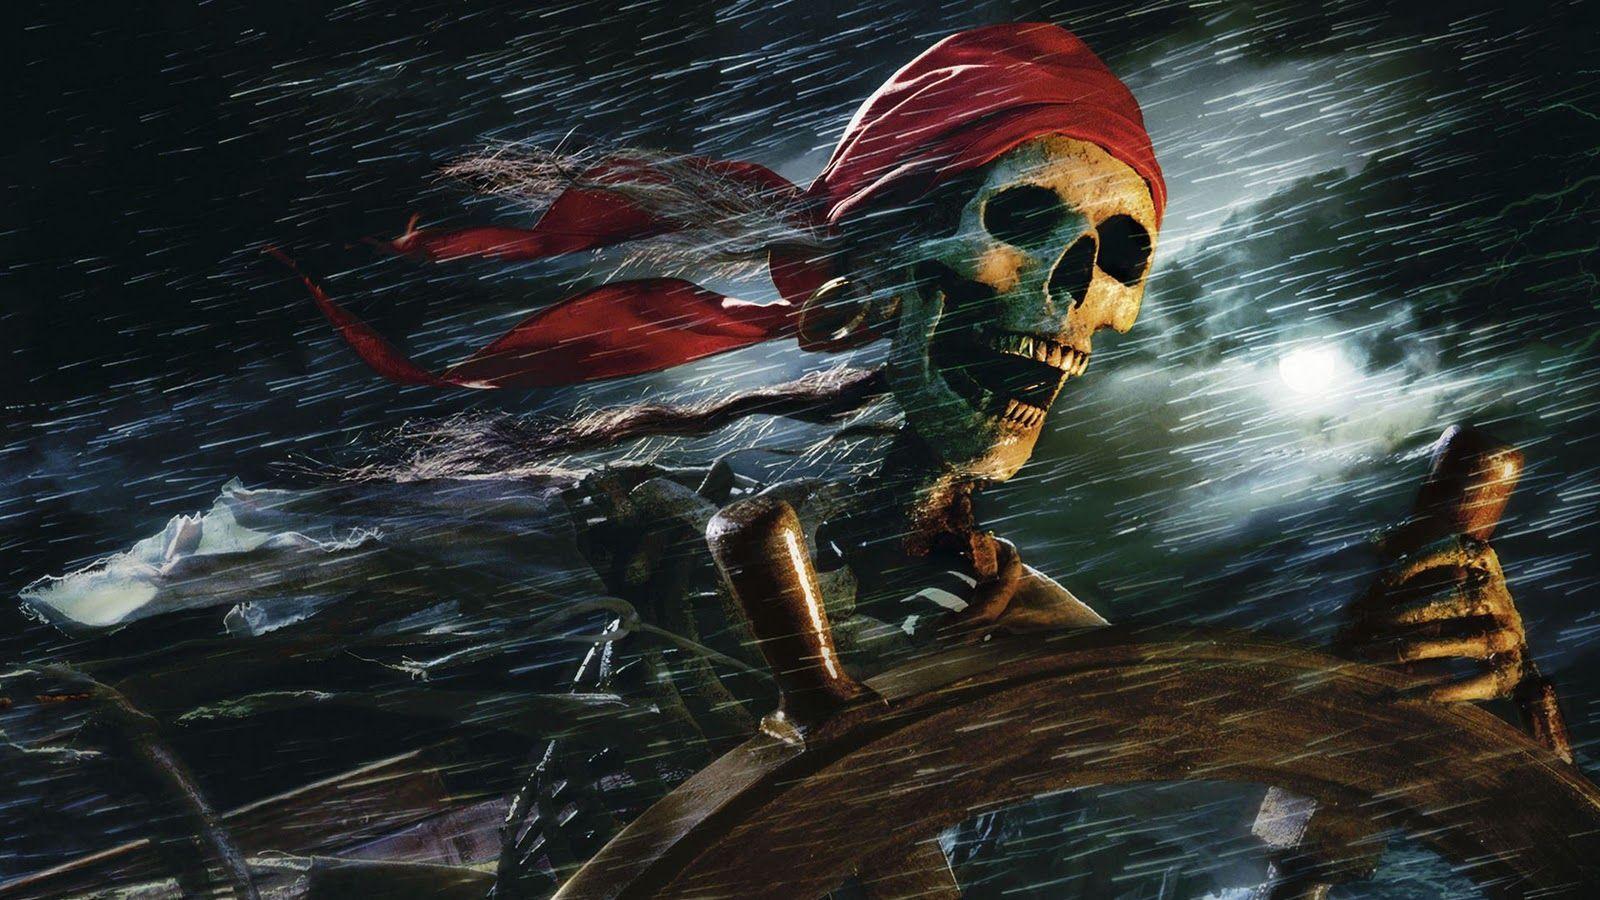 Pirates Of The Caribbean Wallpaper HD Wallpaper